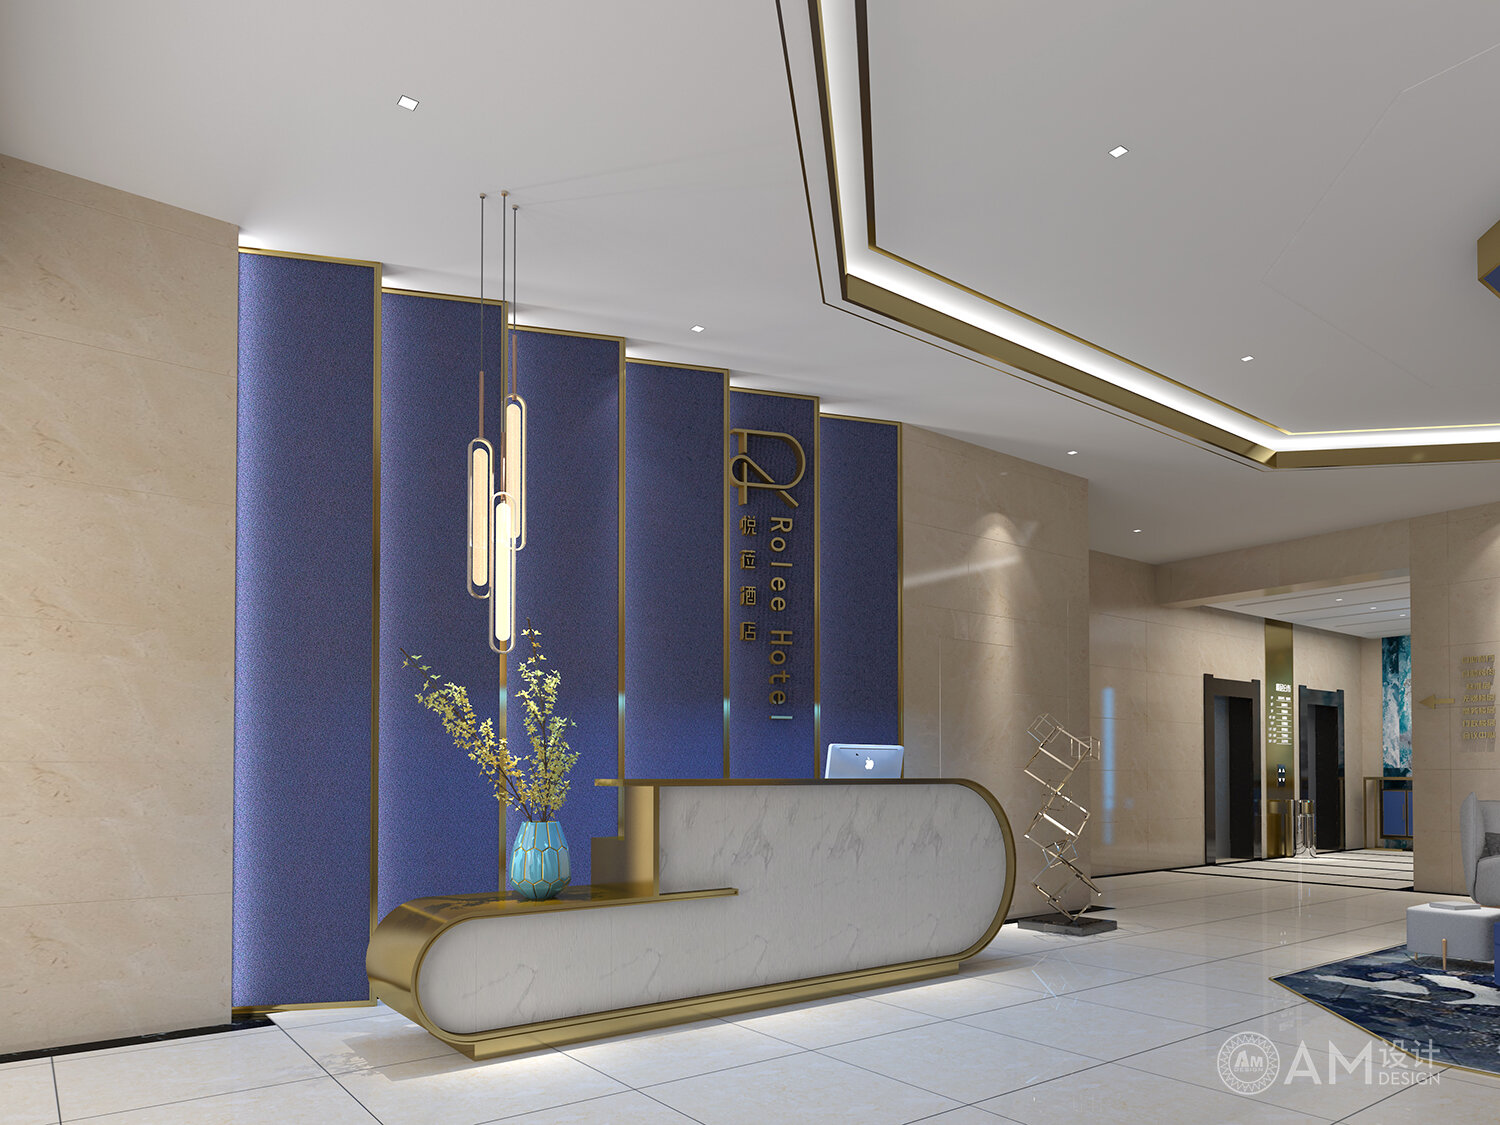 AM DESIGN | Front desk design of Xi'an Yuelai Hotel